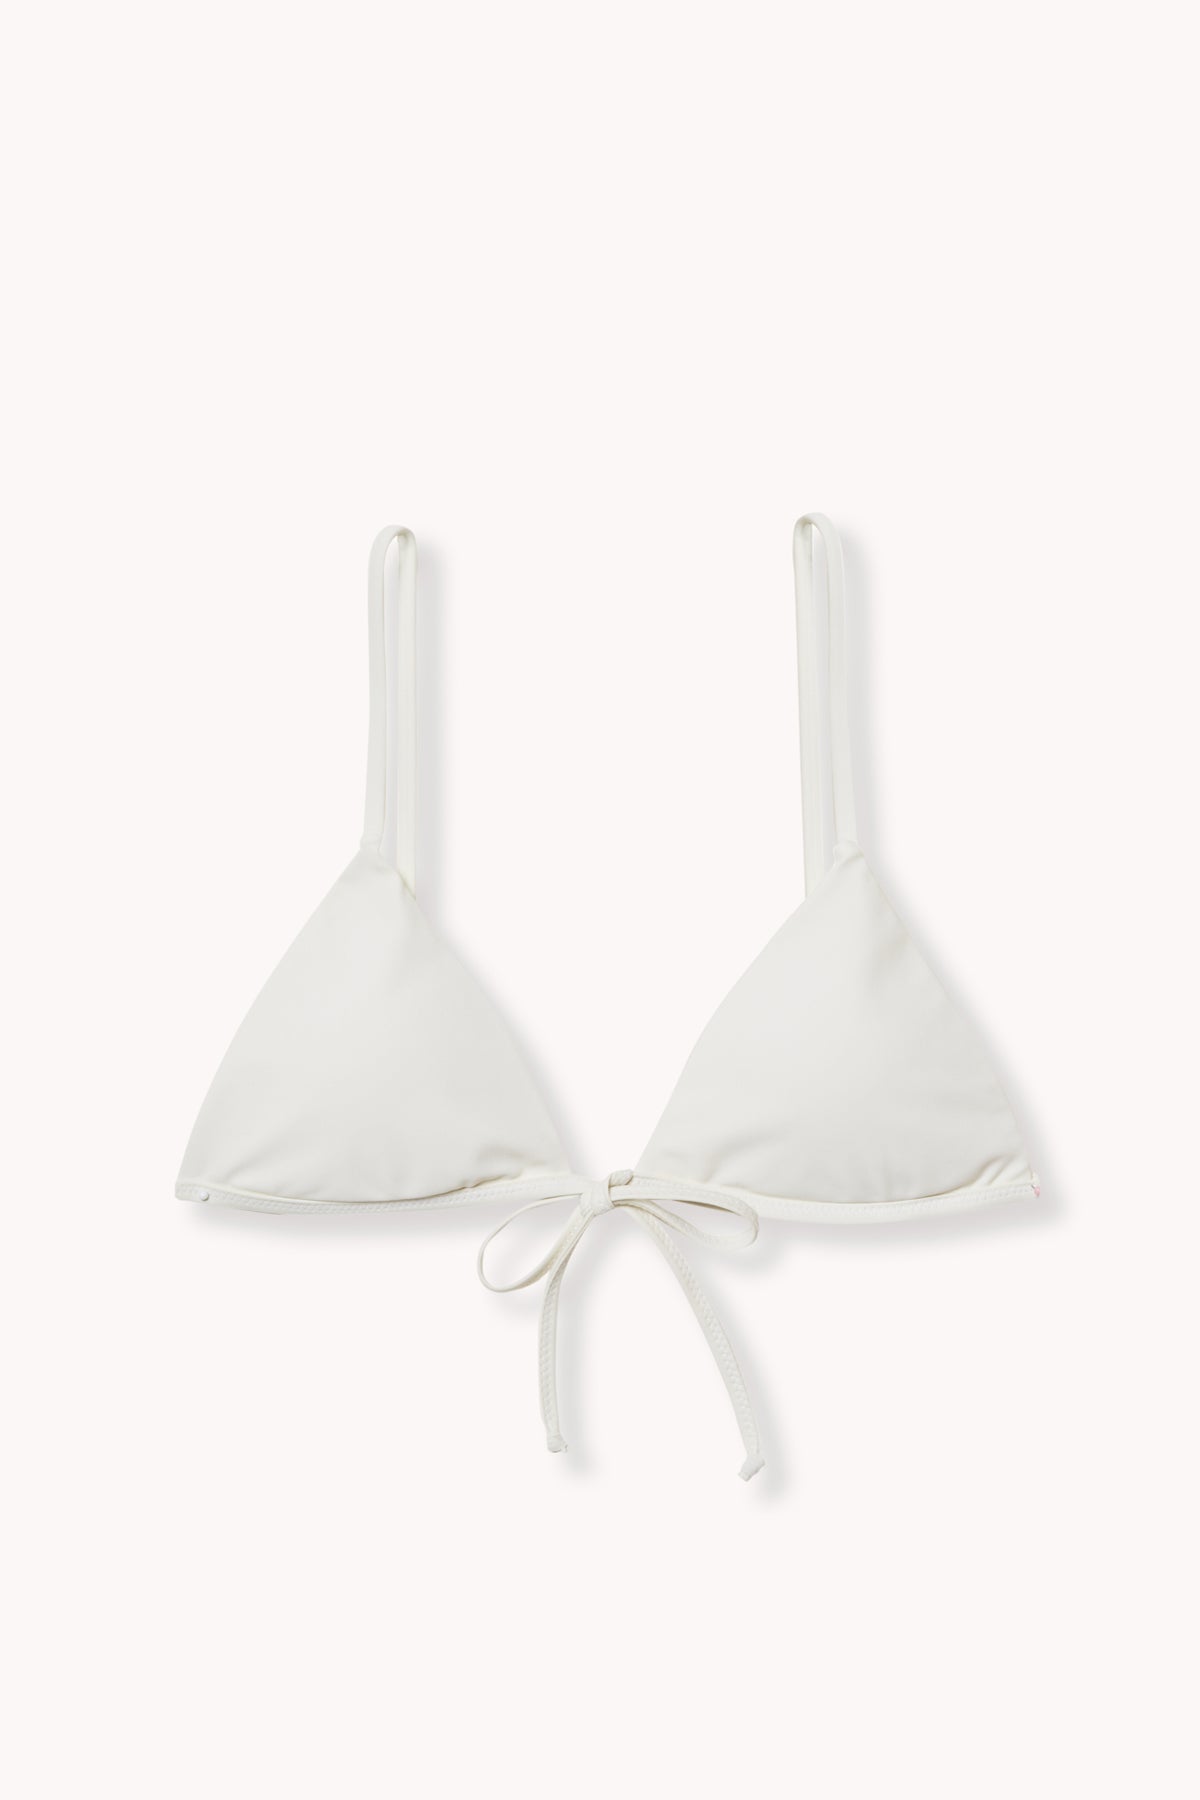 E-comm of the Santos Bikini top  in cream, by Ookioh